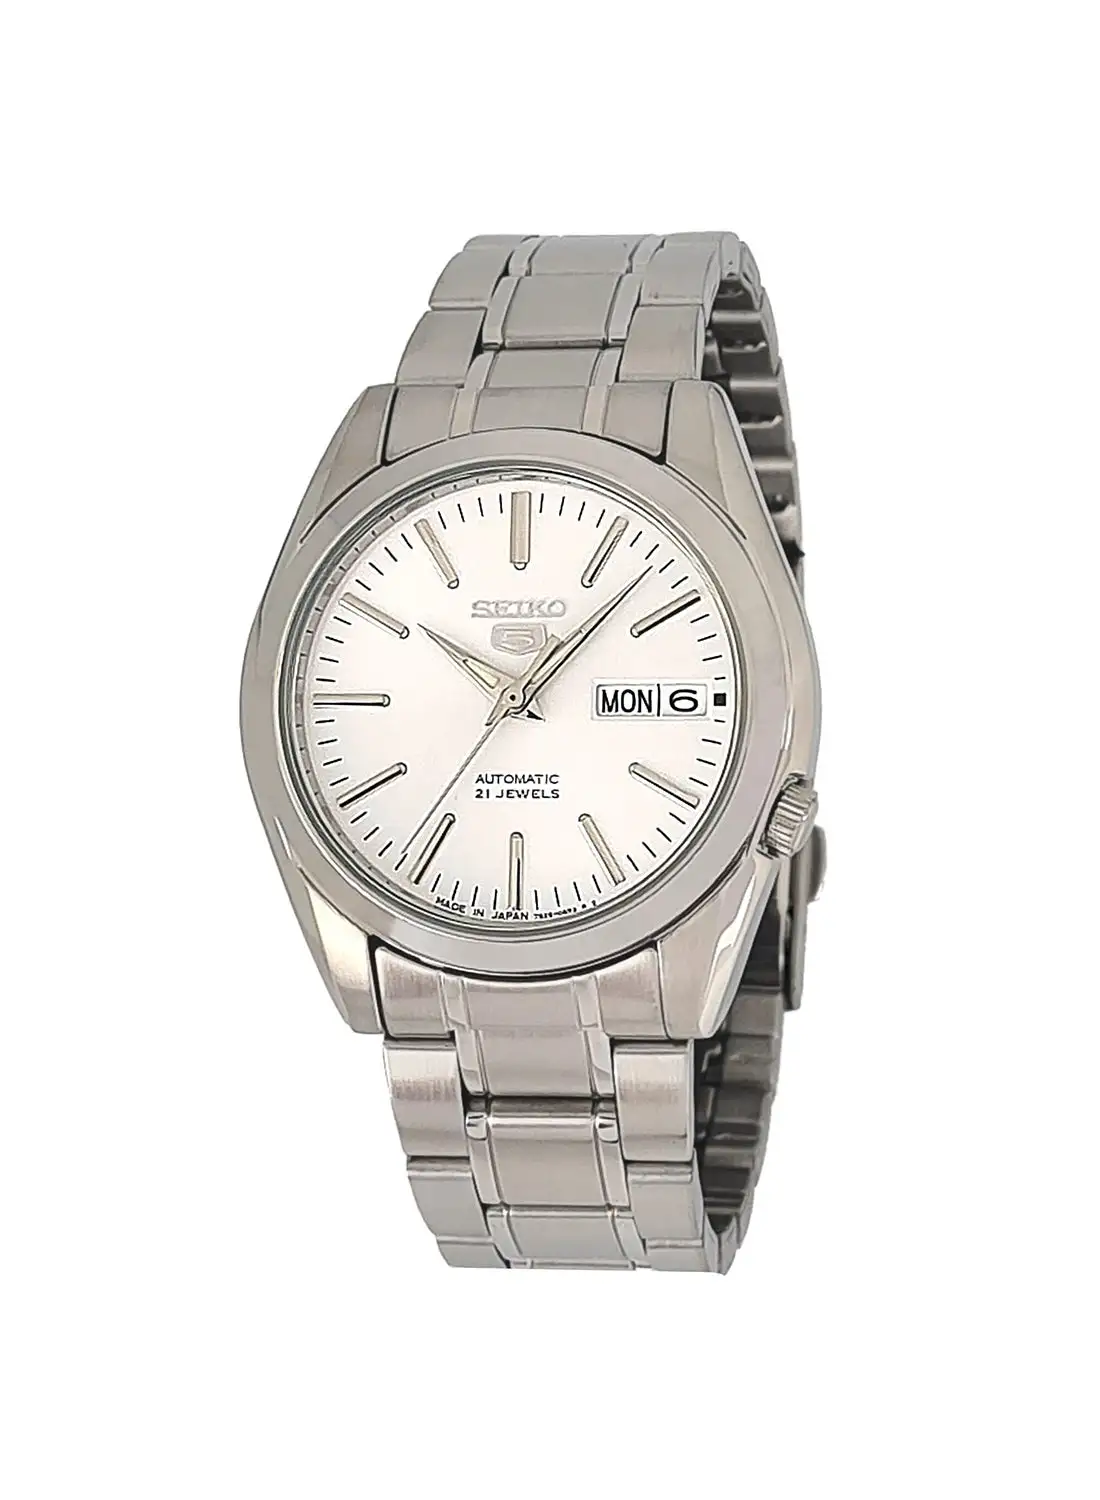 Seiko Men's Round Shape Stainless Steel Analog Wrist Watch 37 mm - Silver - SNKL41J1